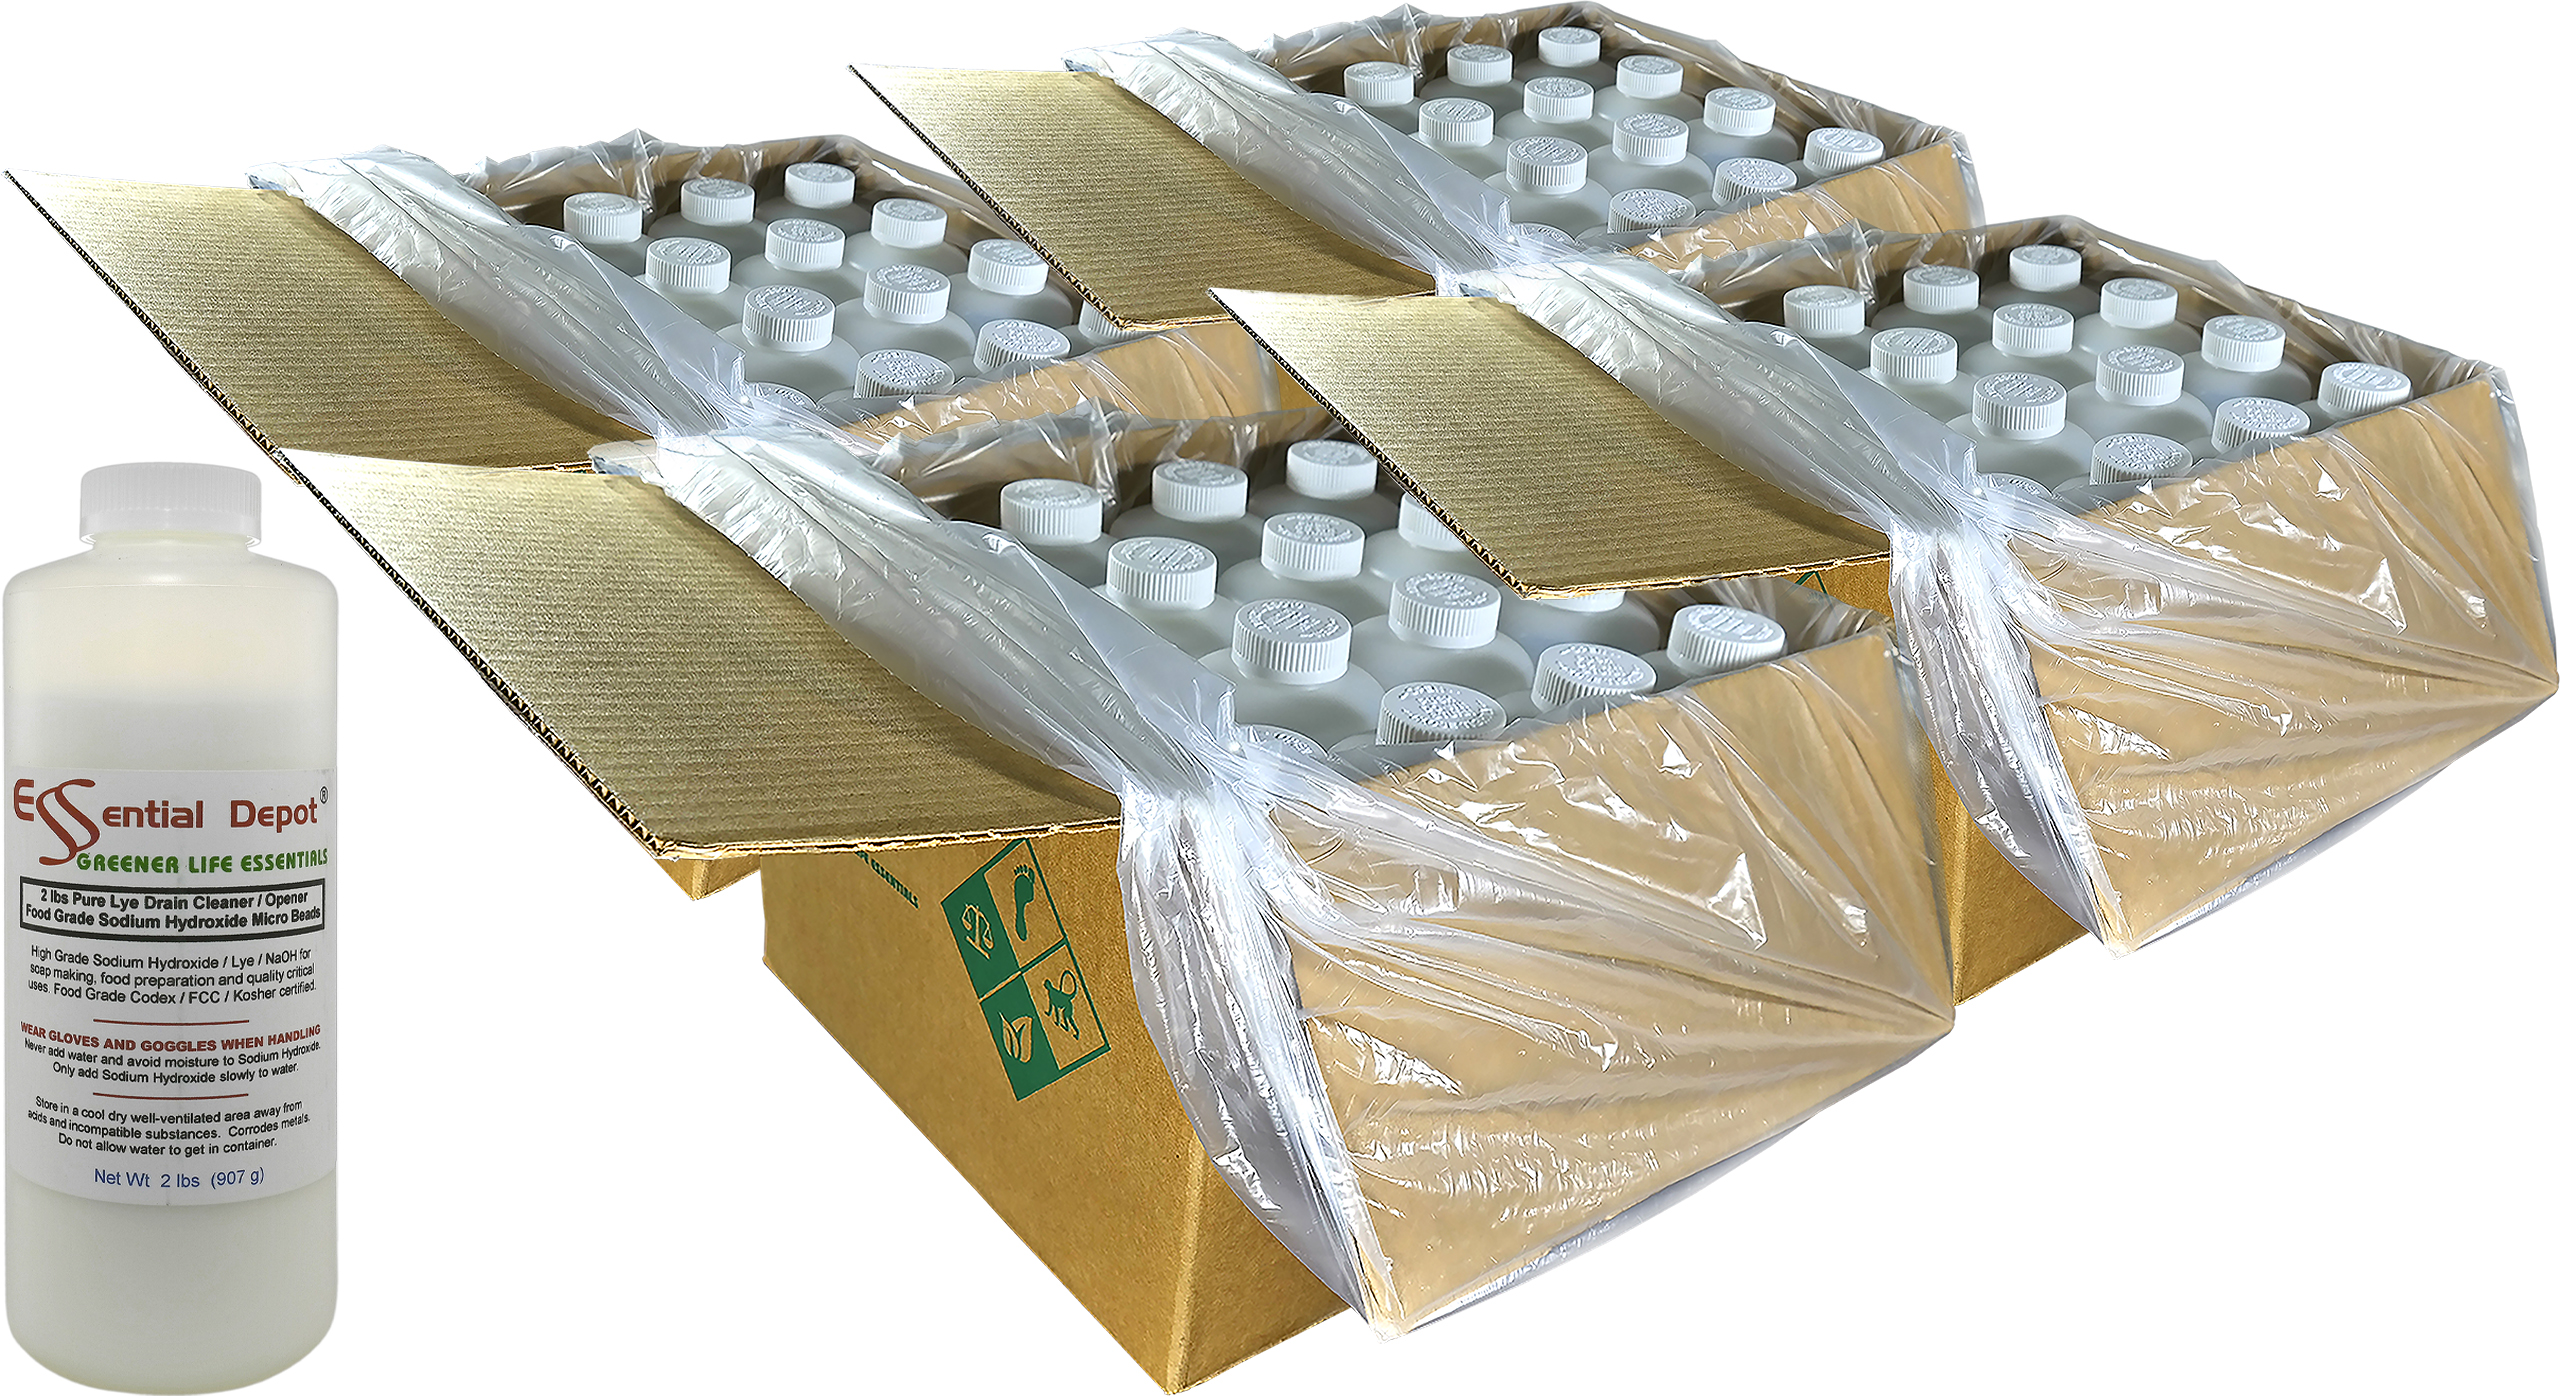 Caustic Soda 98% Purity Sodium Hydroxide for Soap Making - China Caustic  Soda, Naoh